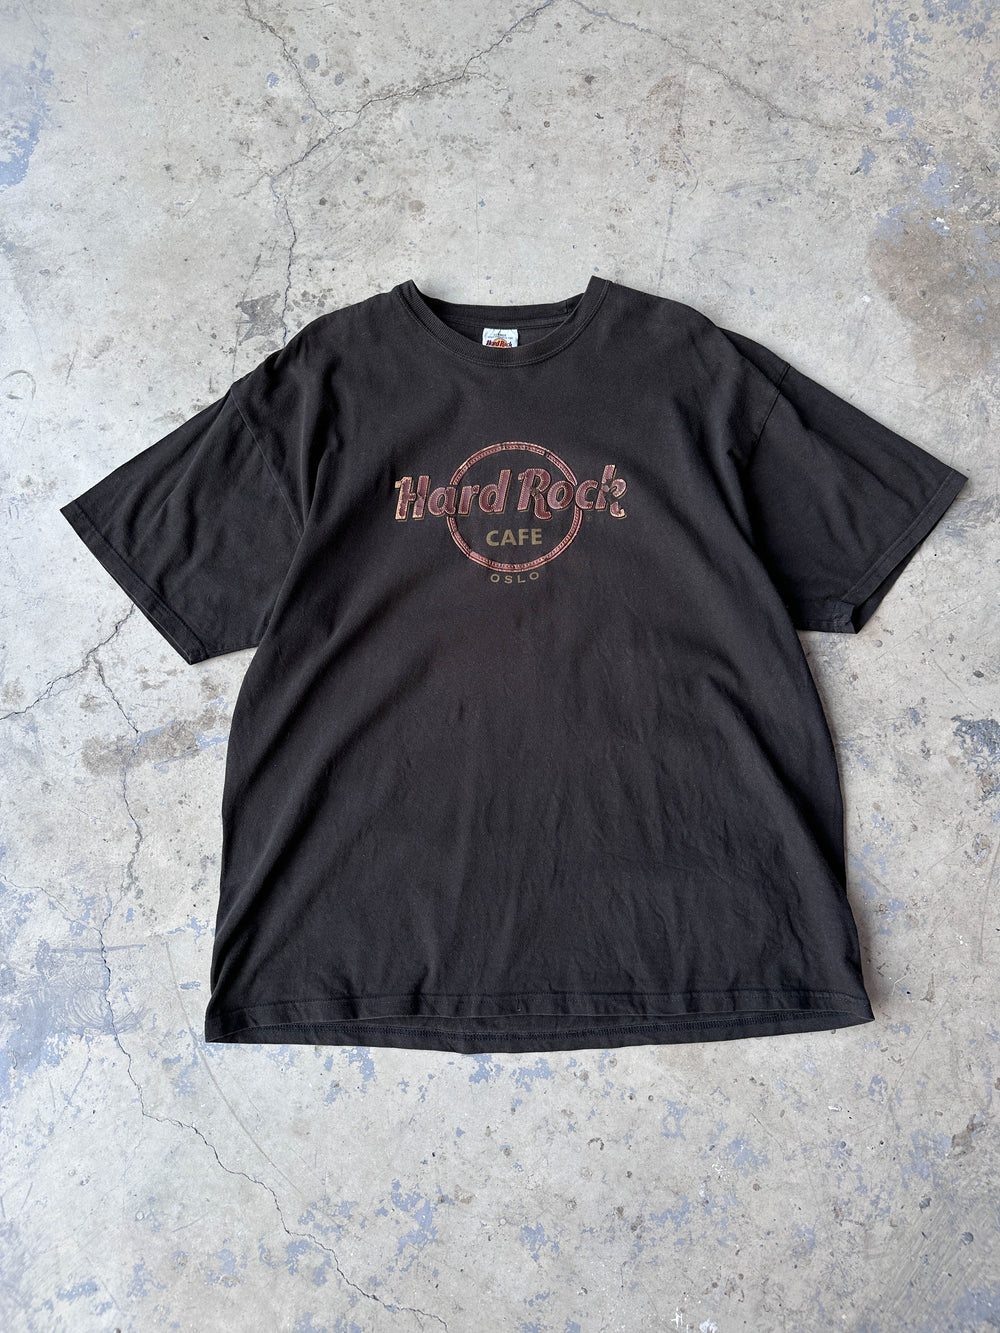 Camiseta Hard Rock Oslo vintage 90s